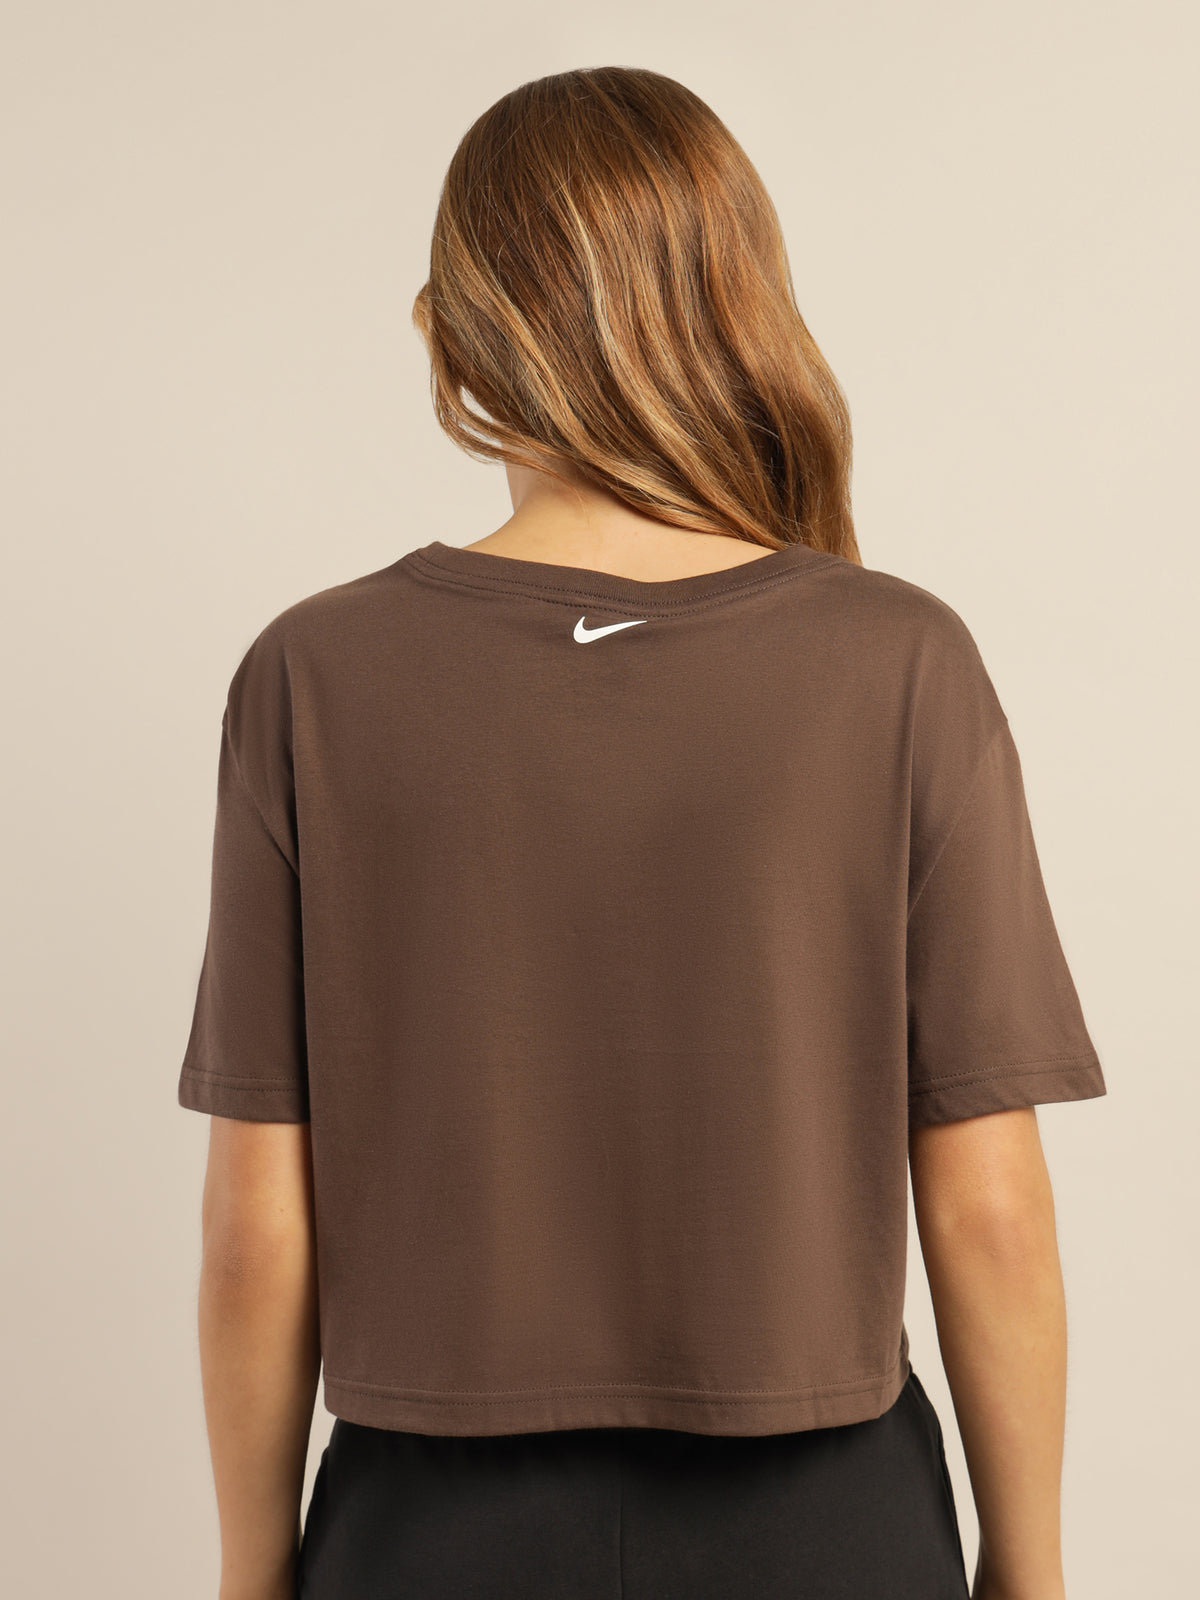 Nike Sportswear Crop Short Sleeve T-Shirt in Baroque Brown &amp; White